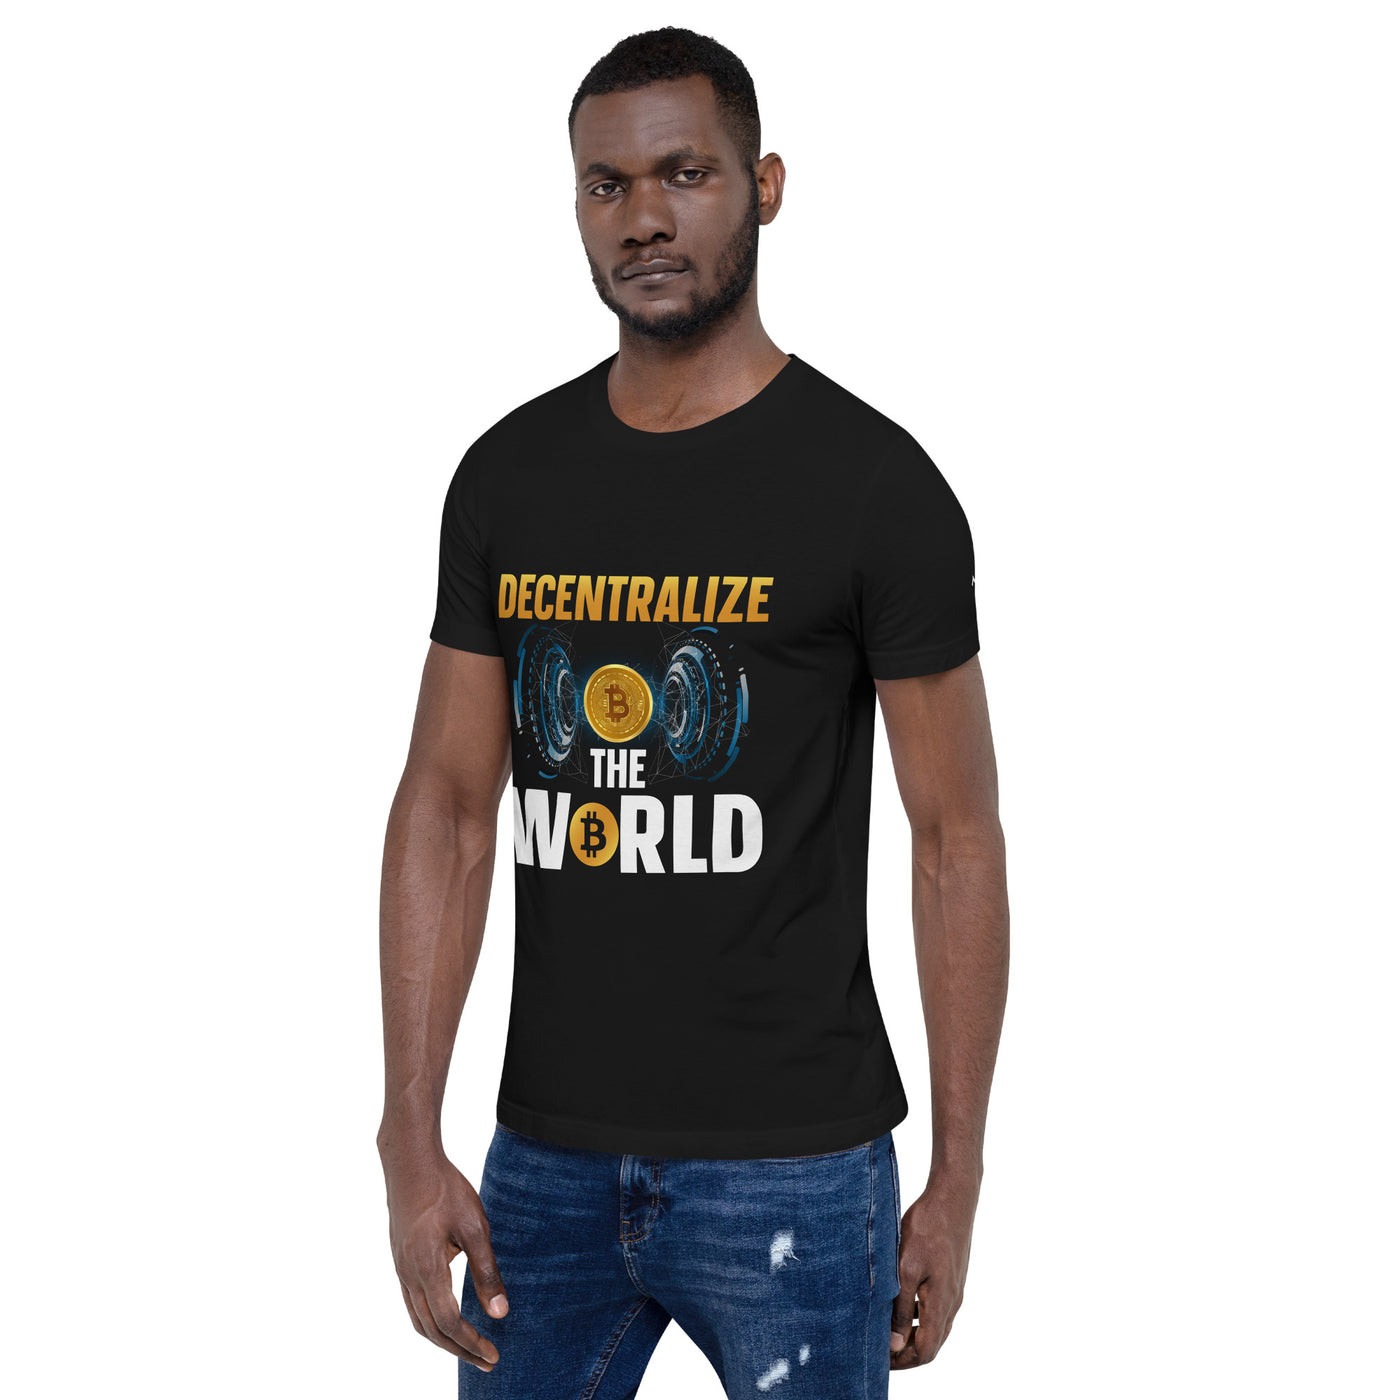 Decentralize the World - Unisex t-shirt